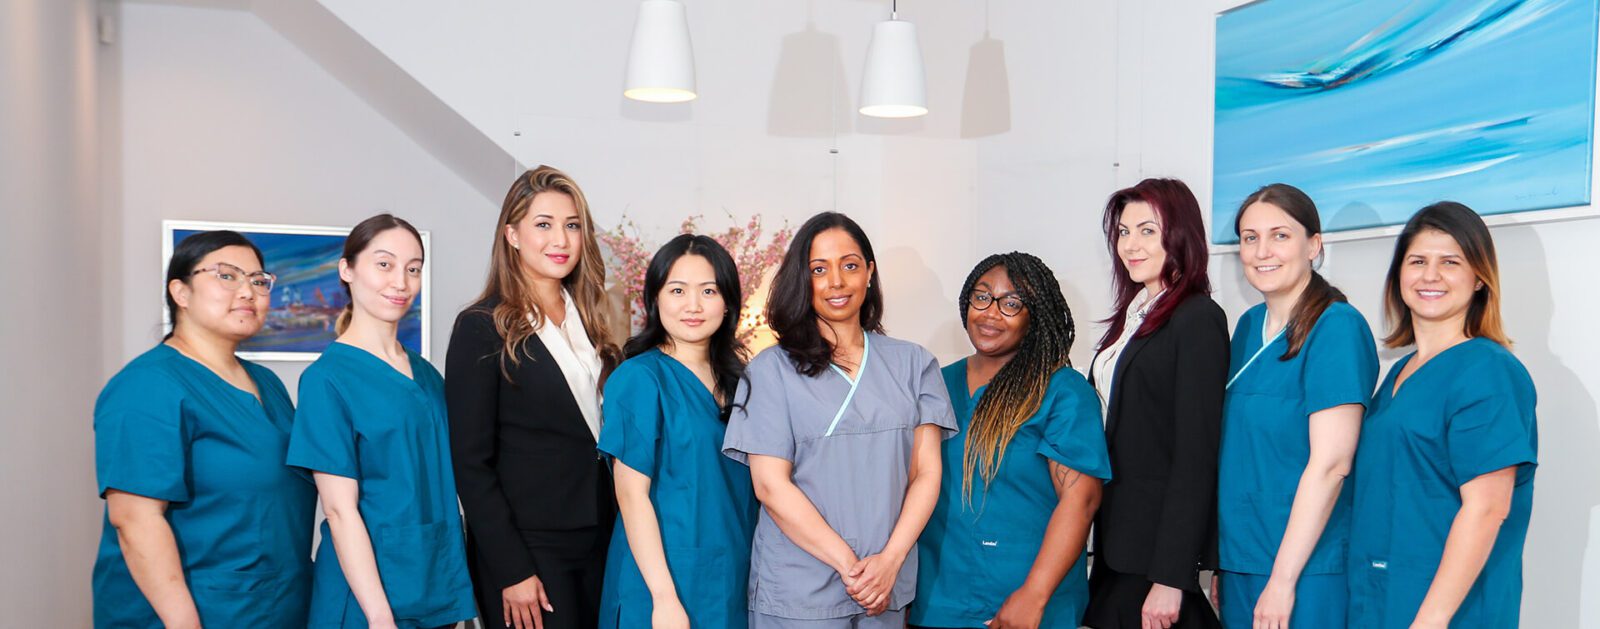 Pure Periodontics Clinic London - All-Female Dental Team - Hormones and Dental Health Guide